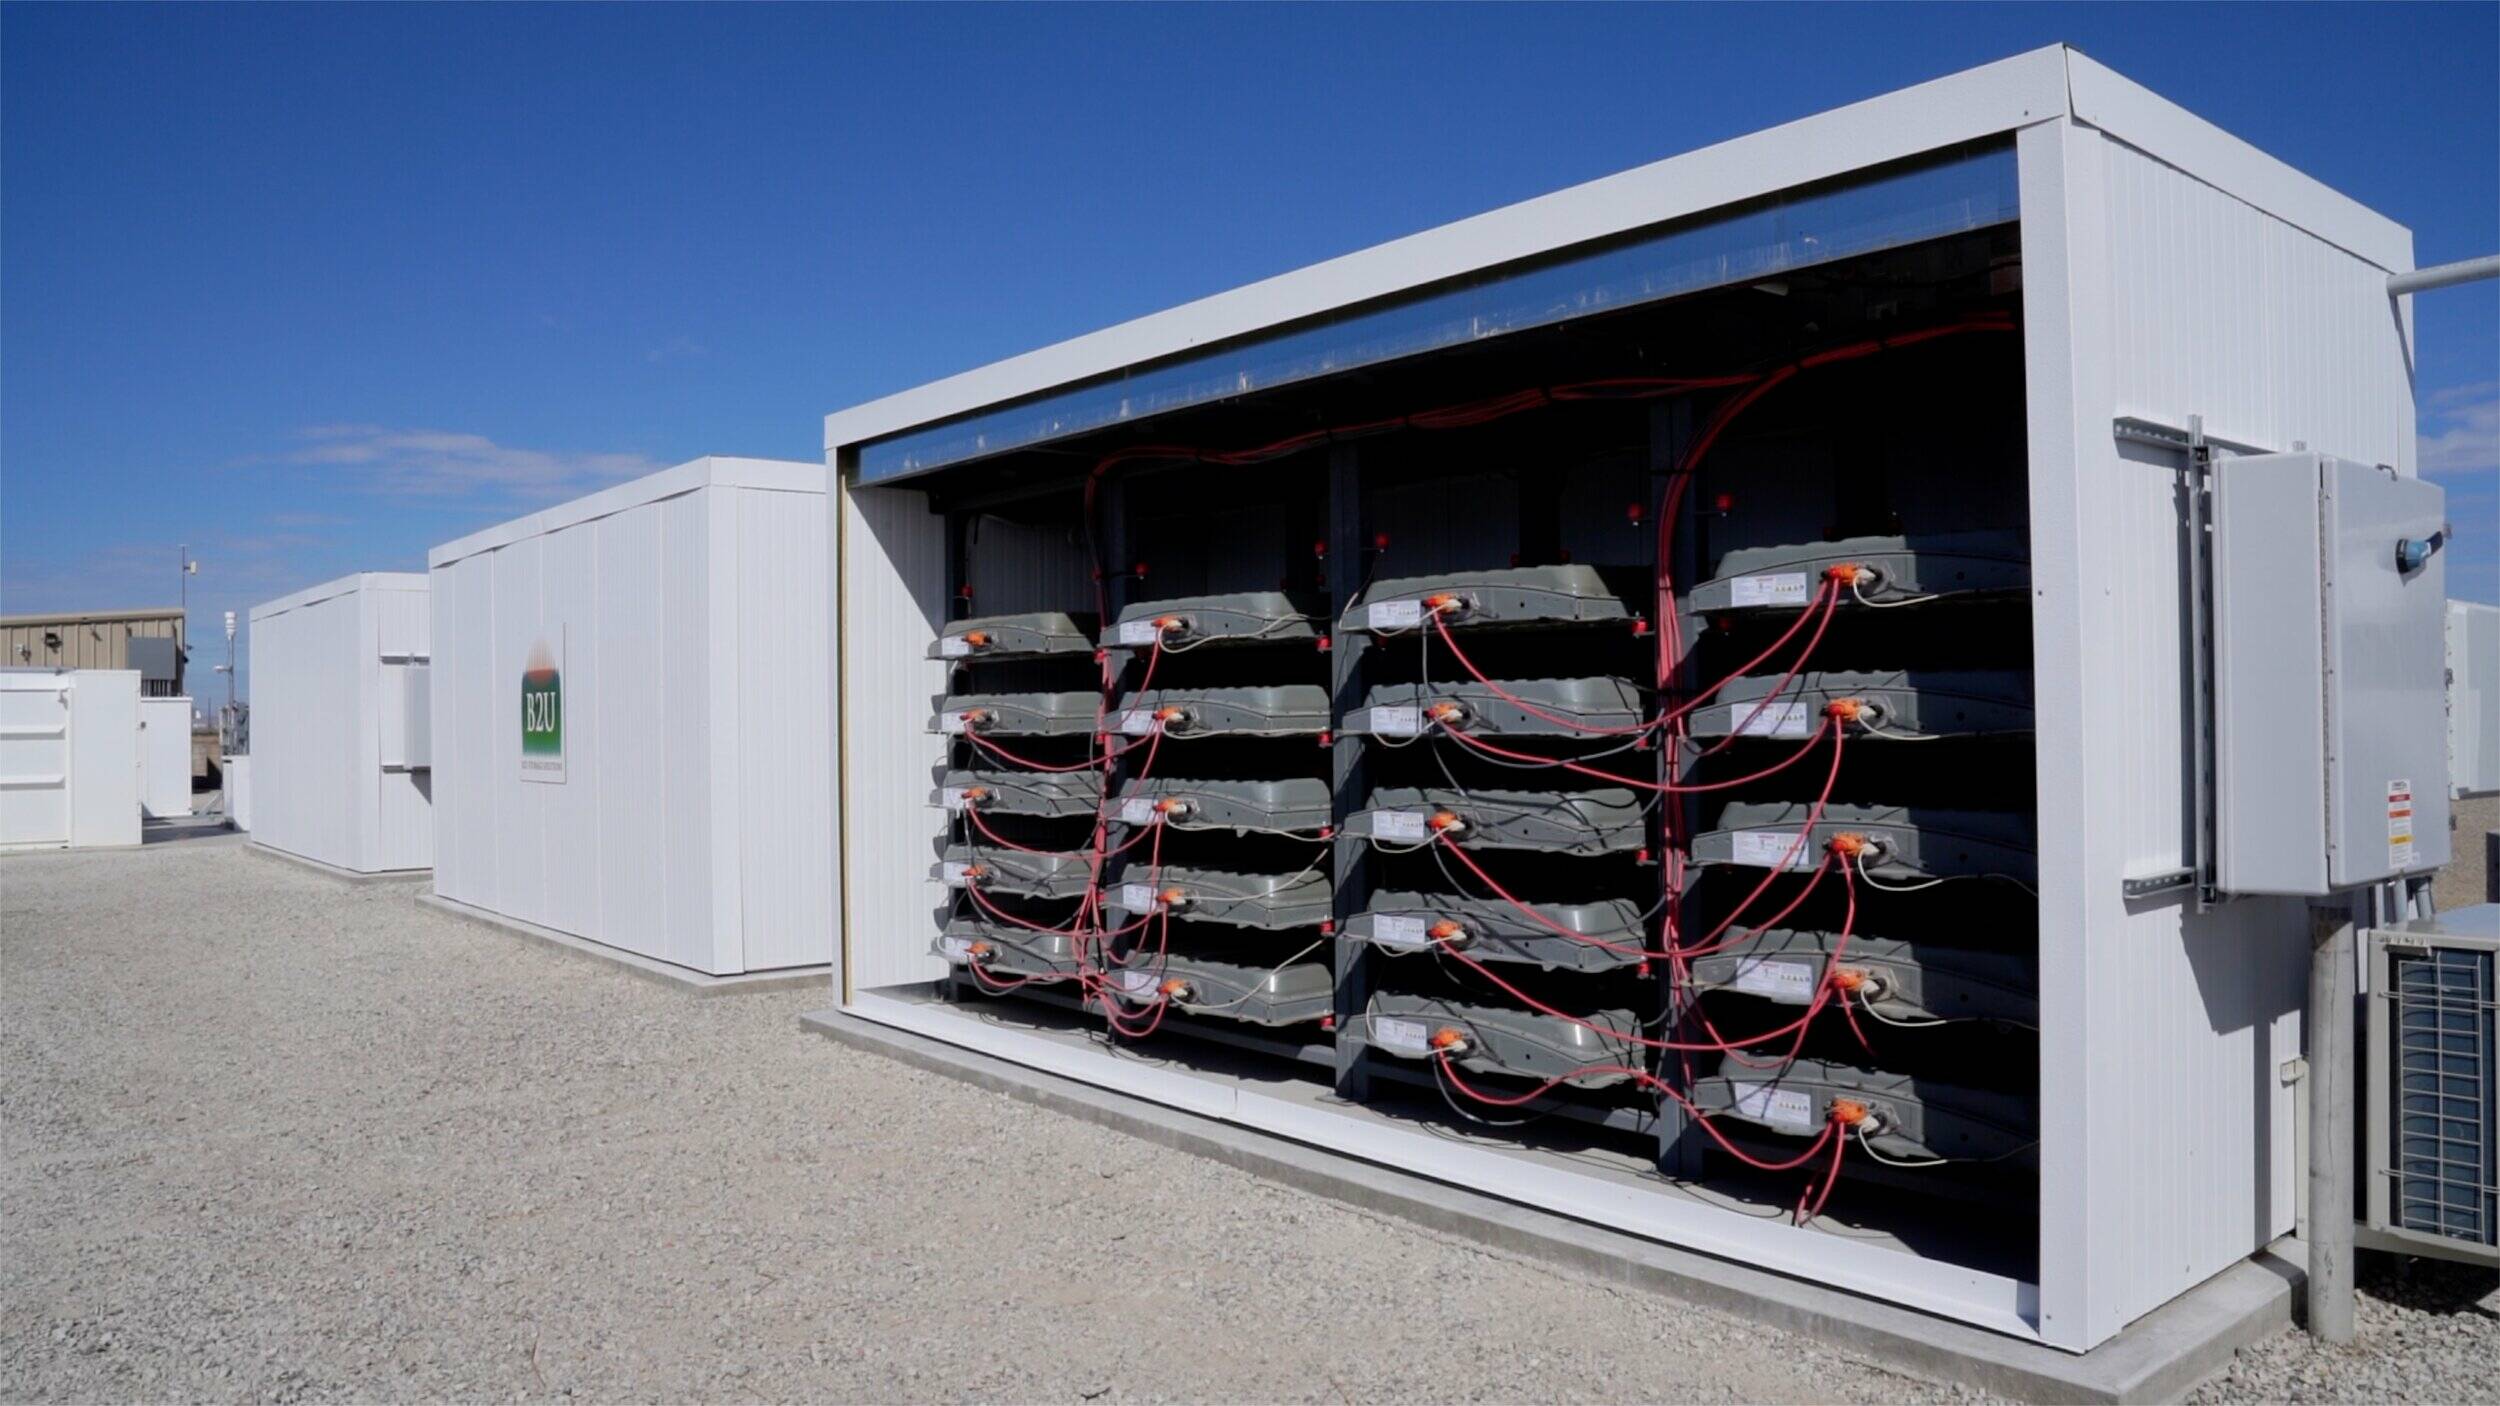 used-ev-car-batteries-find-new-life-storing-solar-power-in-california-trendradars